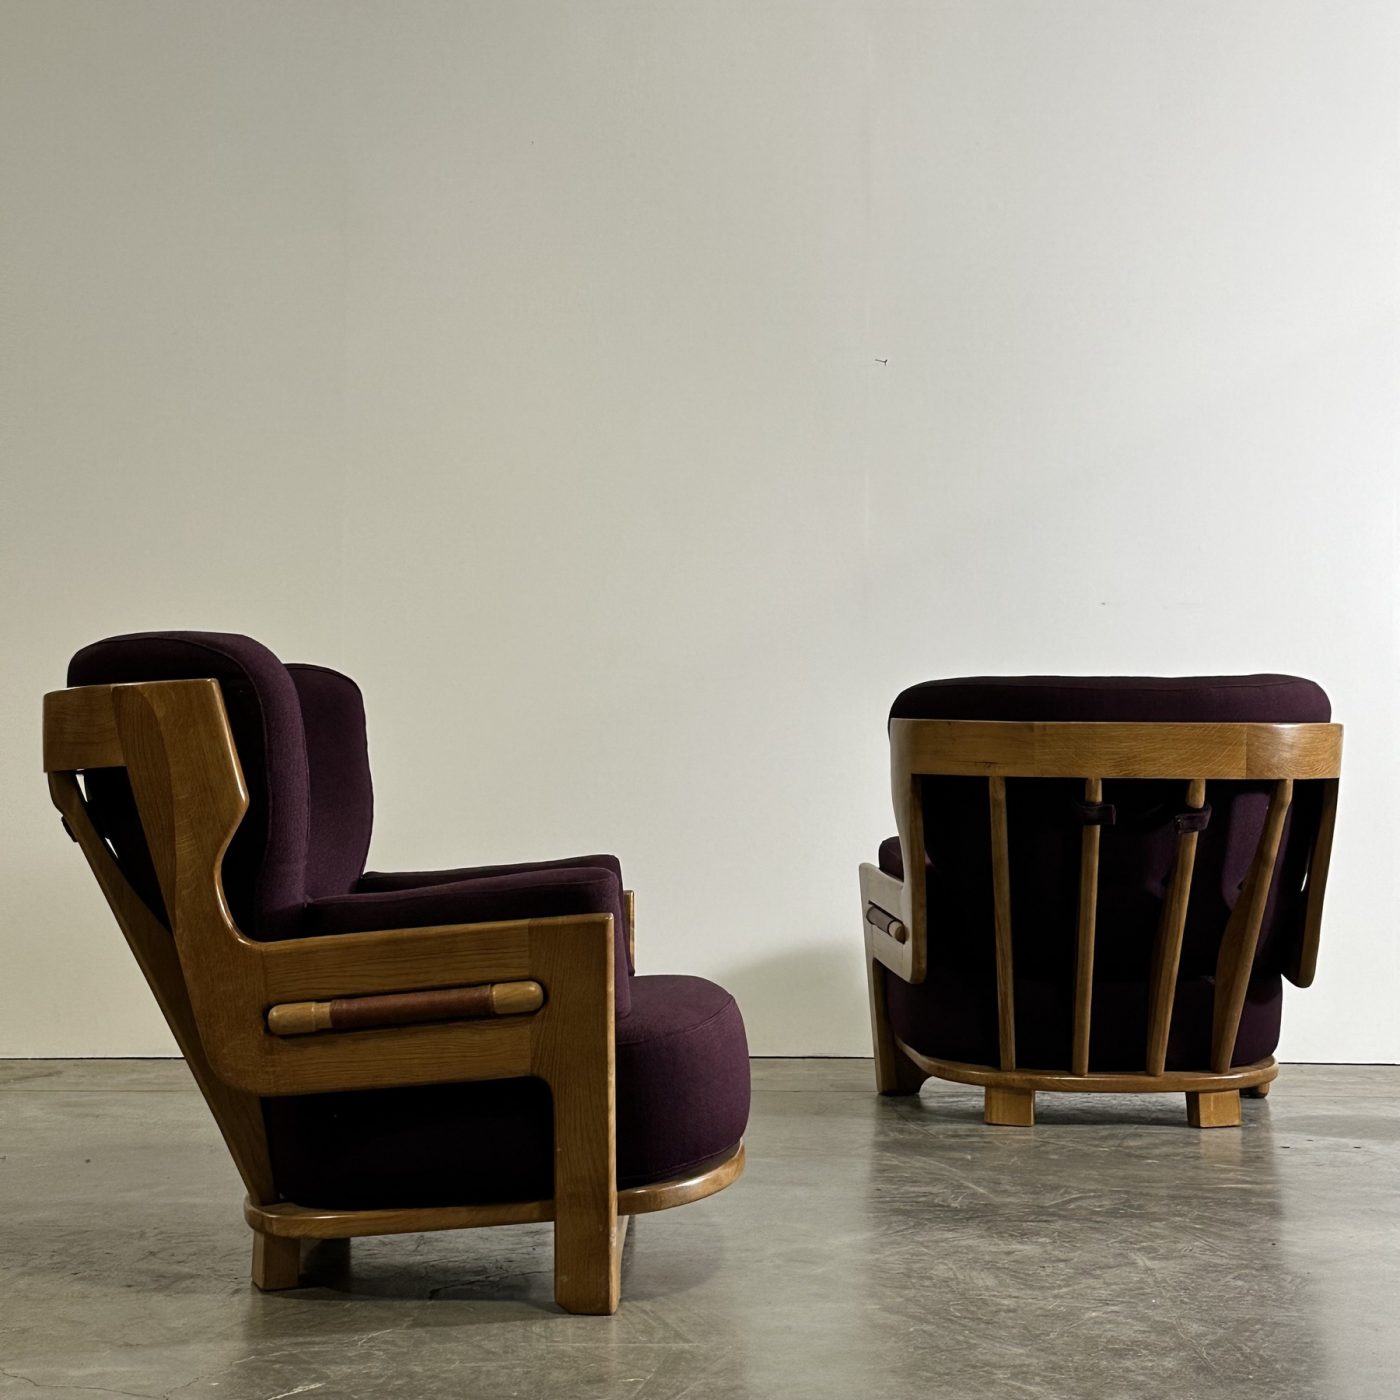 objet-vagabond-denis-armchairs0002